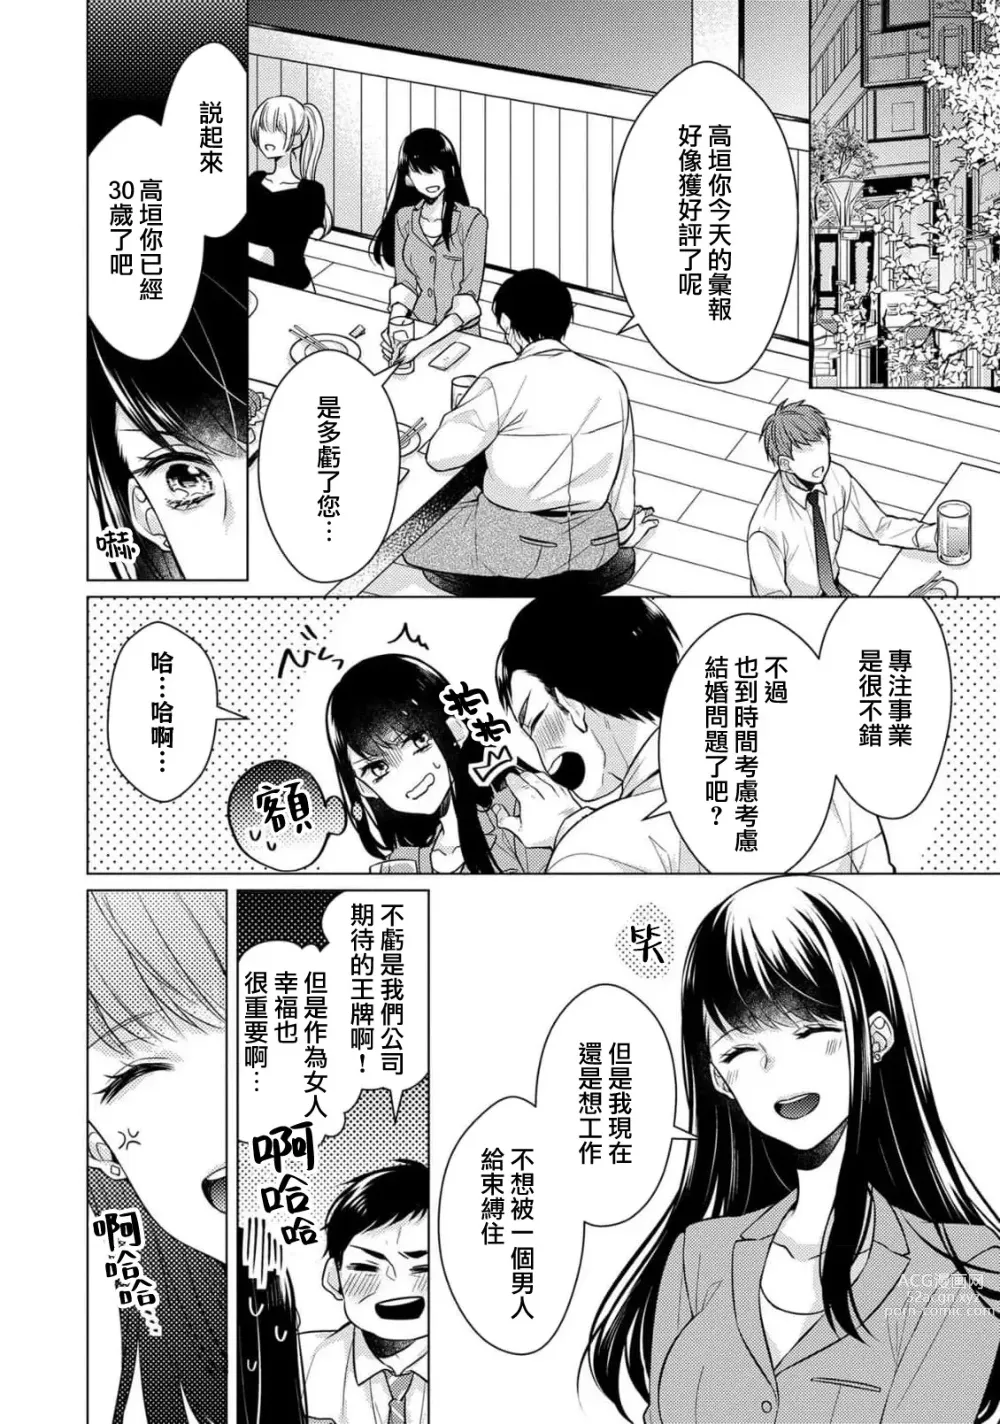 Page 7 of manga 宠爱王子和处女少女~30岁还是处女，这一次和真壁社长签订了炮友契约~ 1-5 end